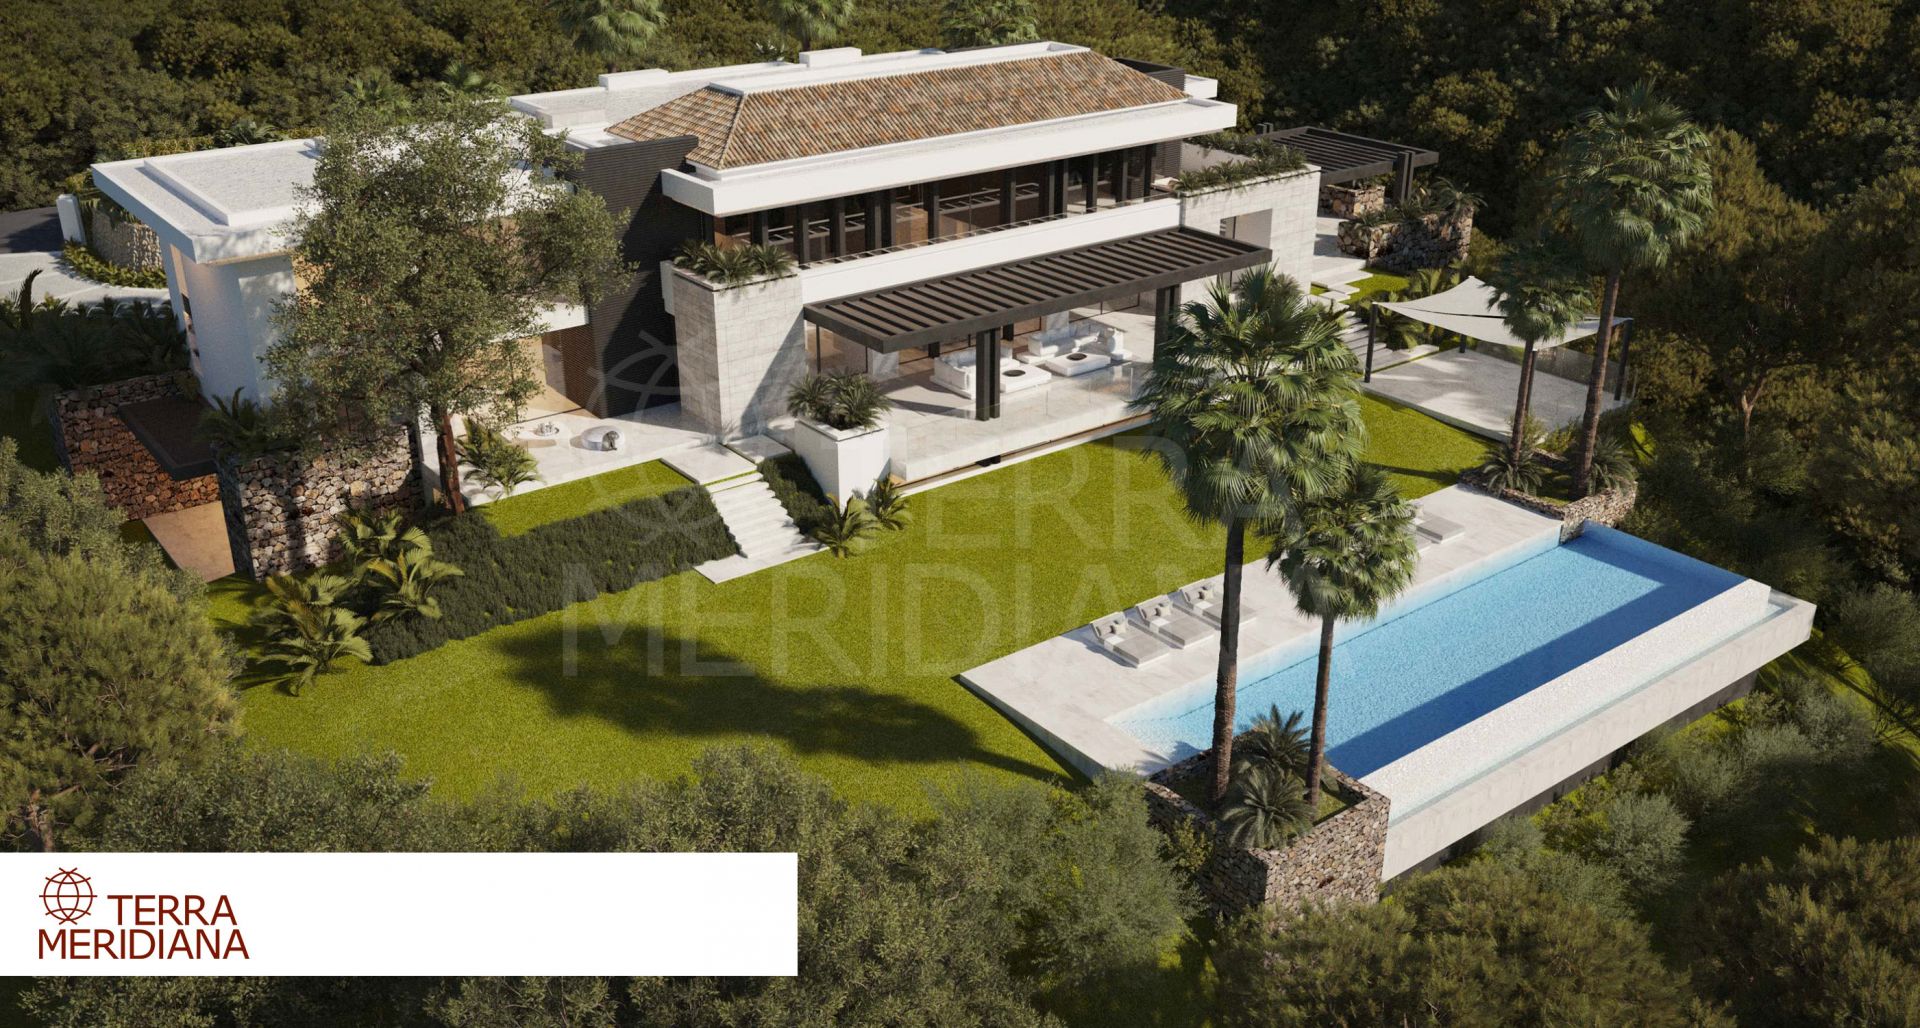 New contemporary-style 8 bedroom luxury villa for sale in premier guard gated La Zagaleta, Benahavis